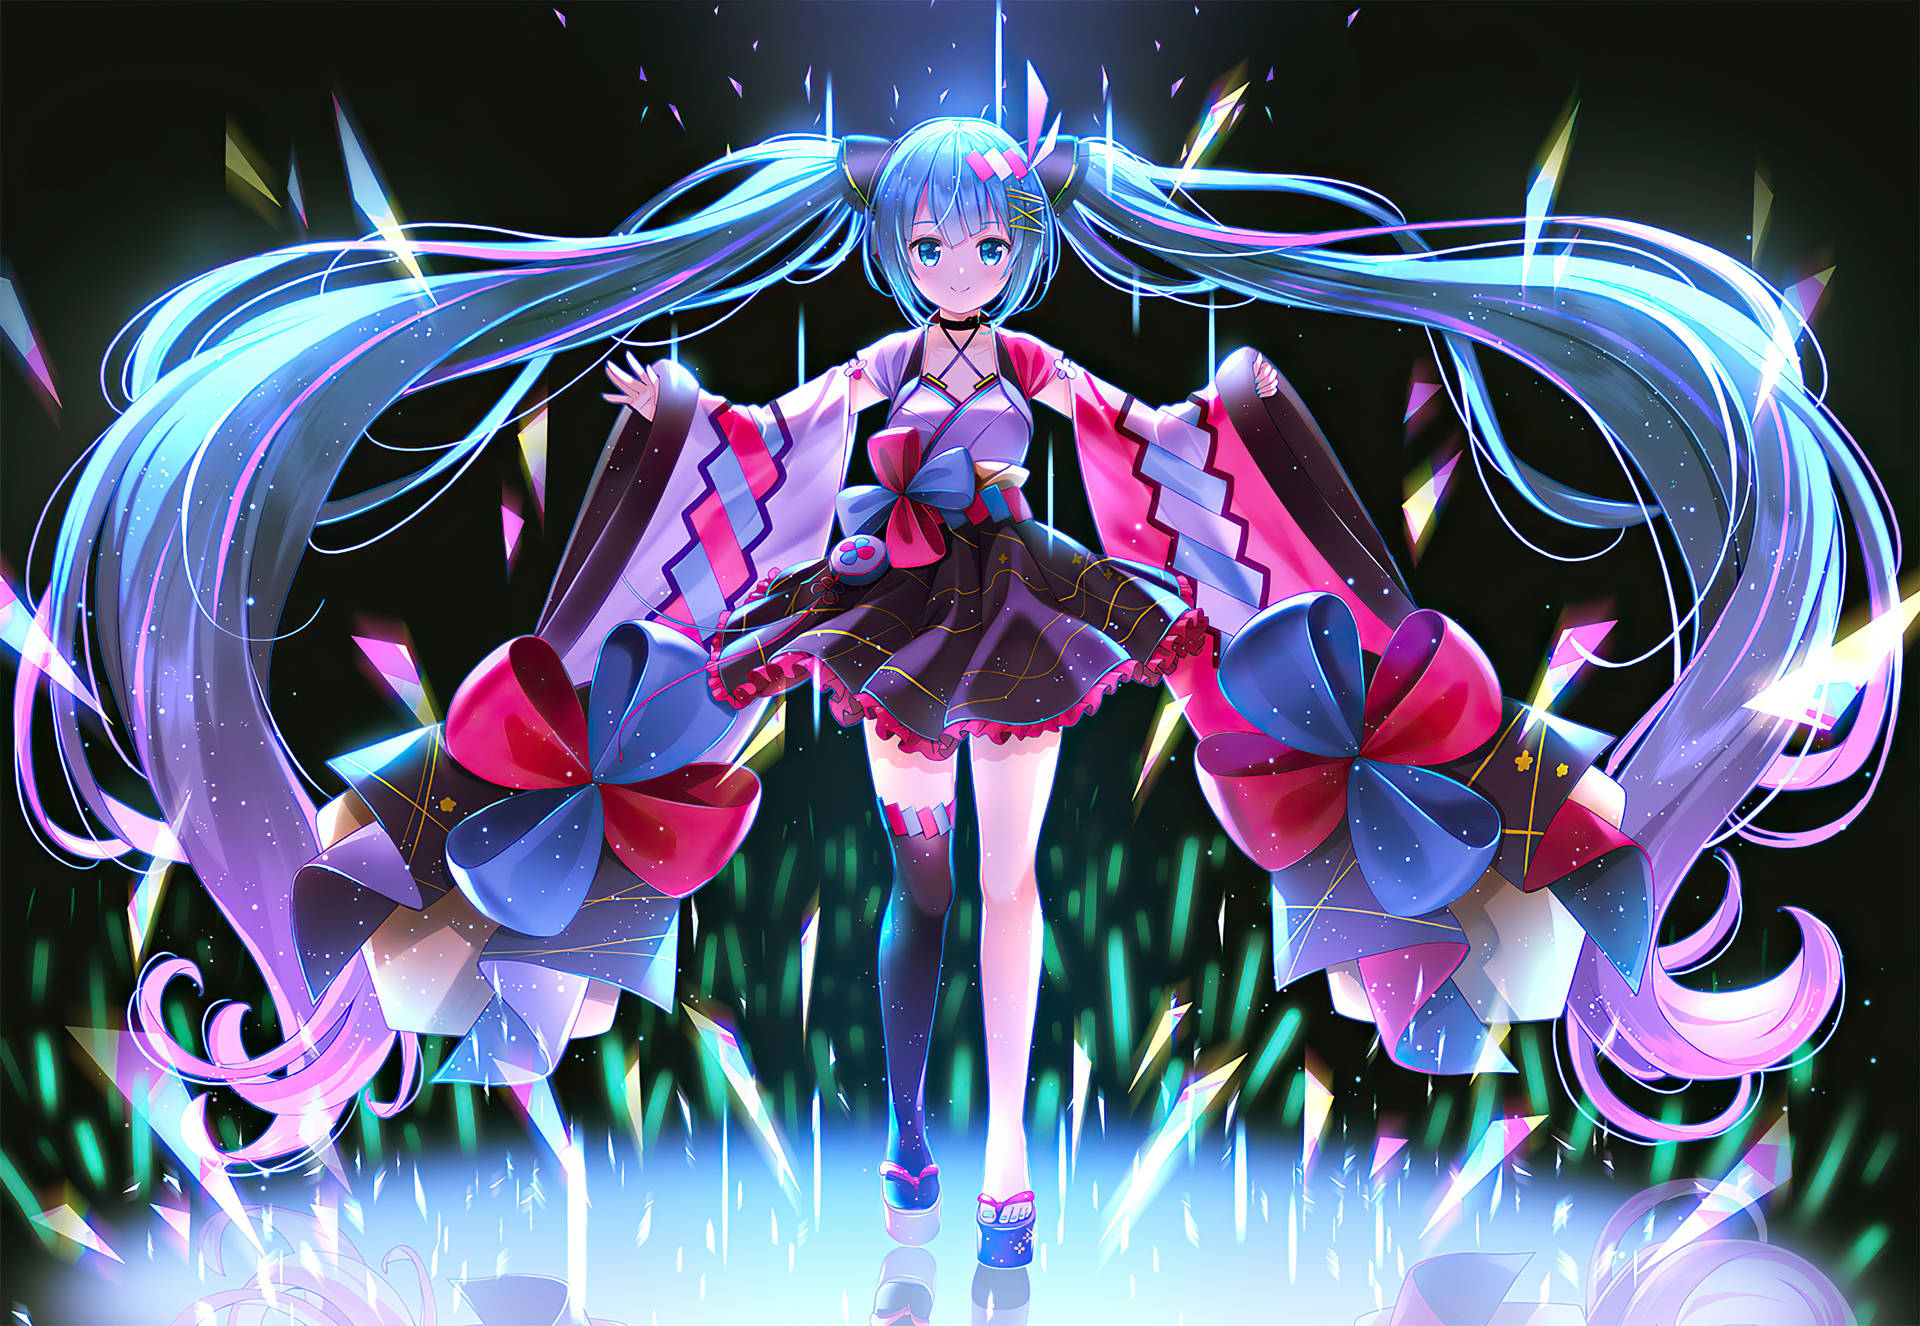 Hatsune Miku - A Virtual Vocaloid Singer. Wallpaper